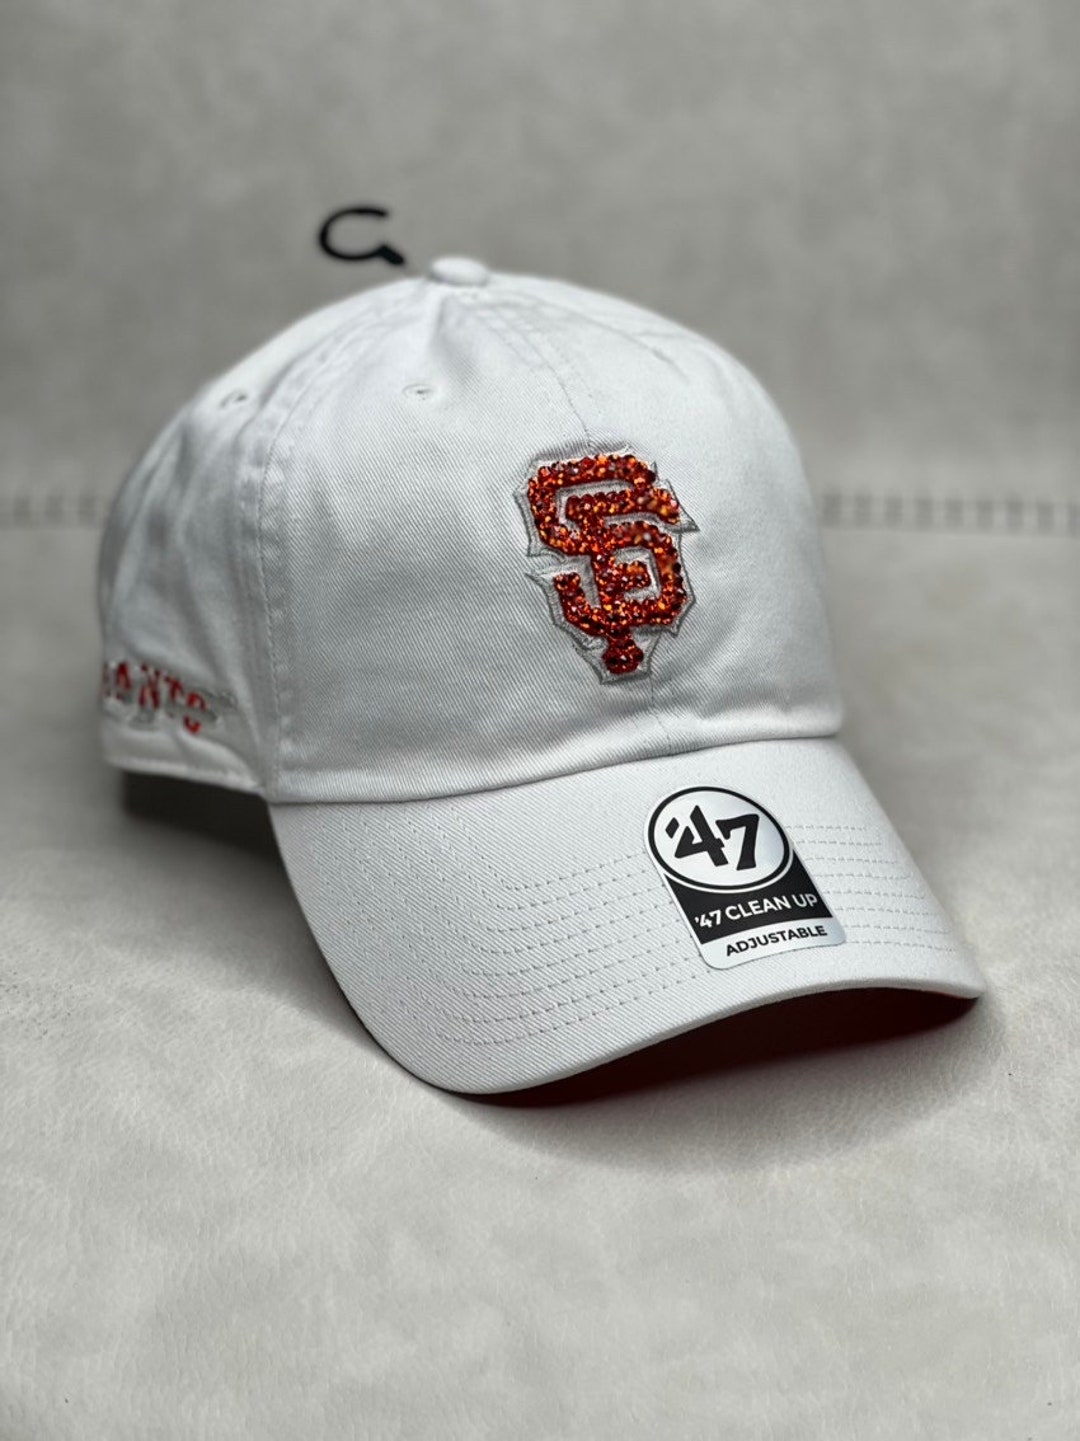 White & Orange SF Giants Bling Hat Swarovski Crystals 